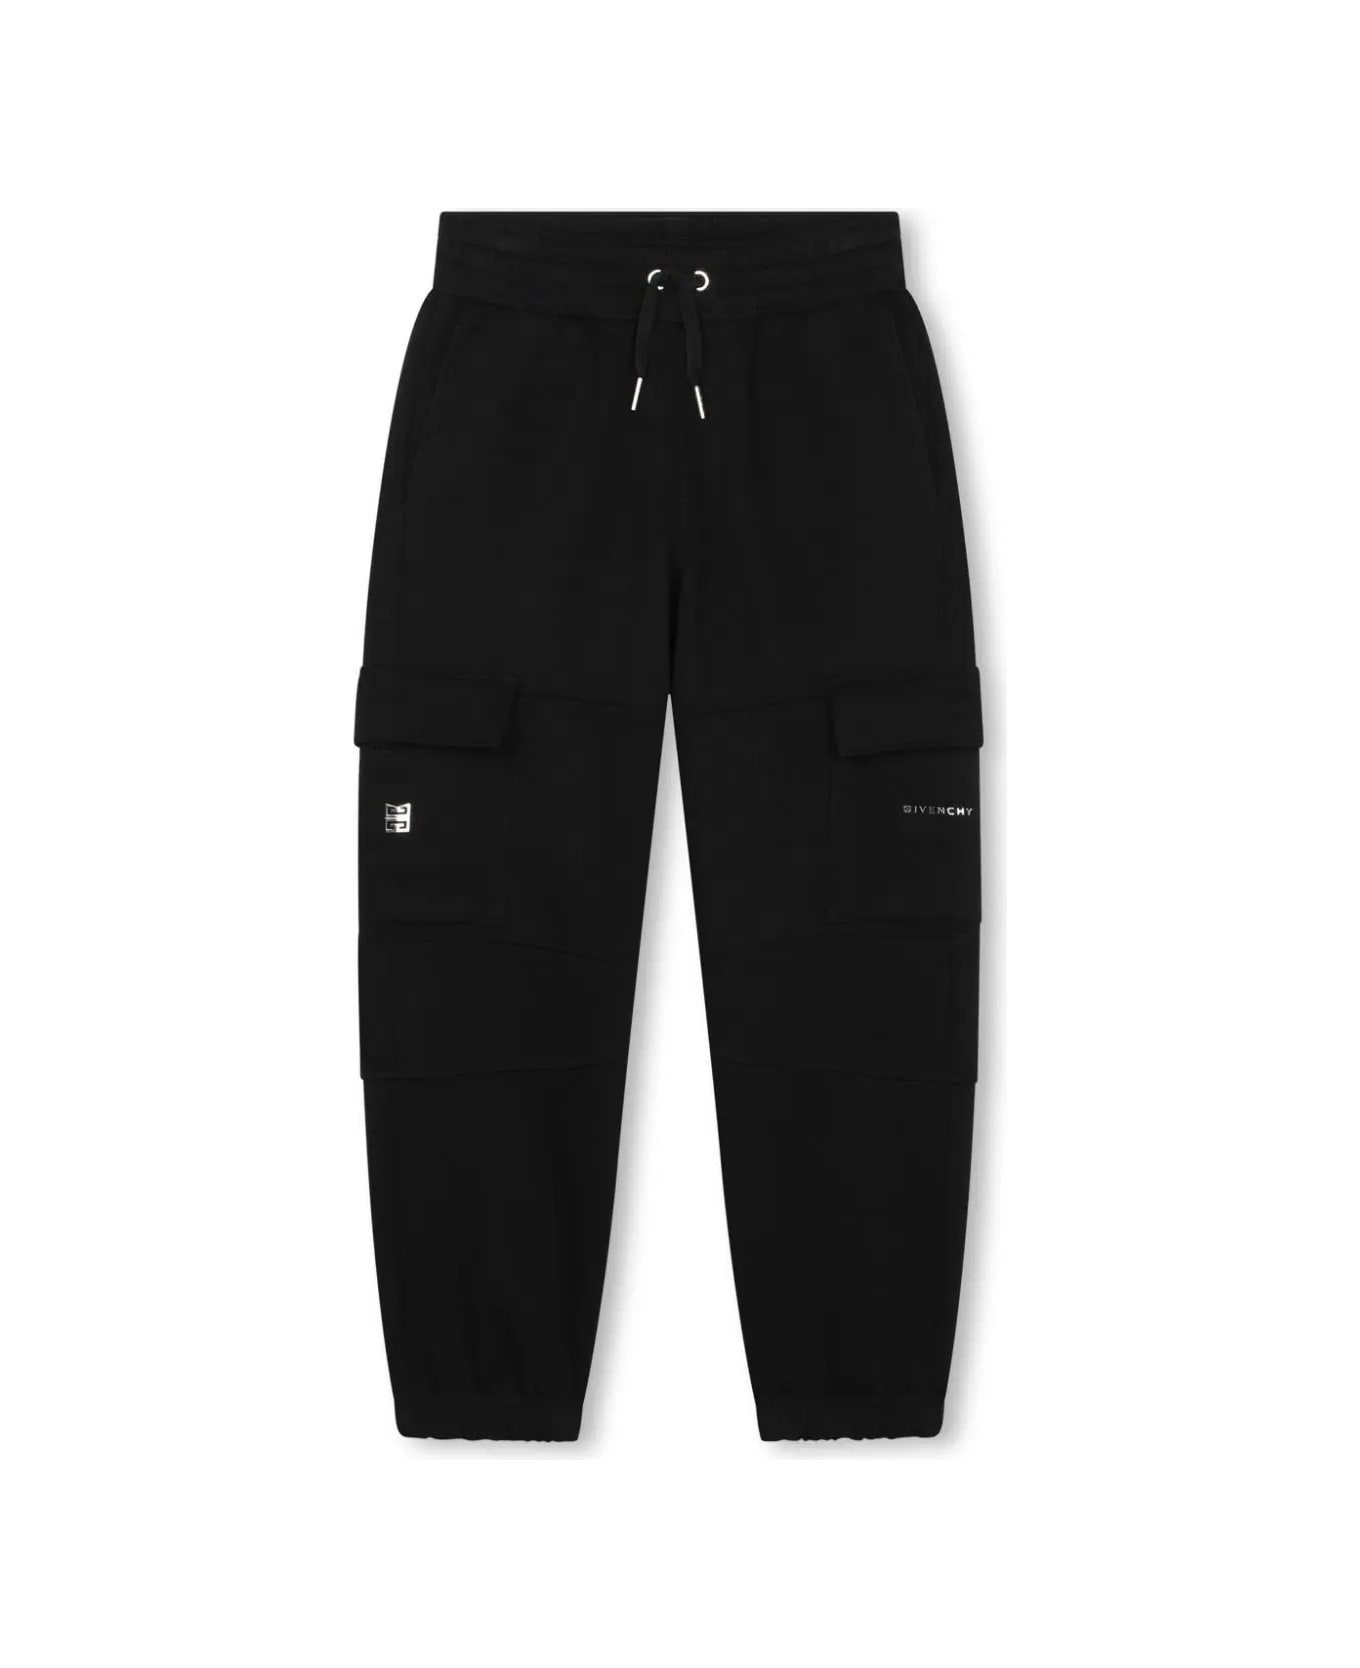 Givenchy Black Cargo Style Sports Pants - Black